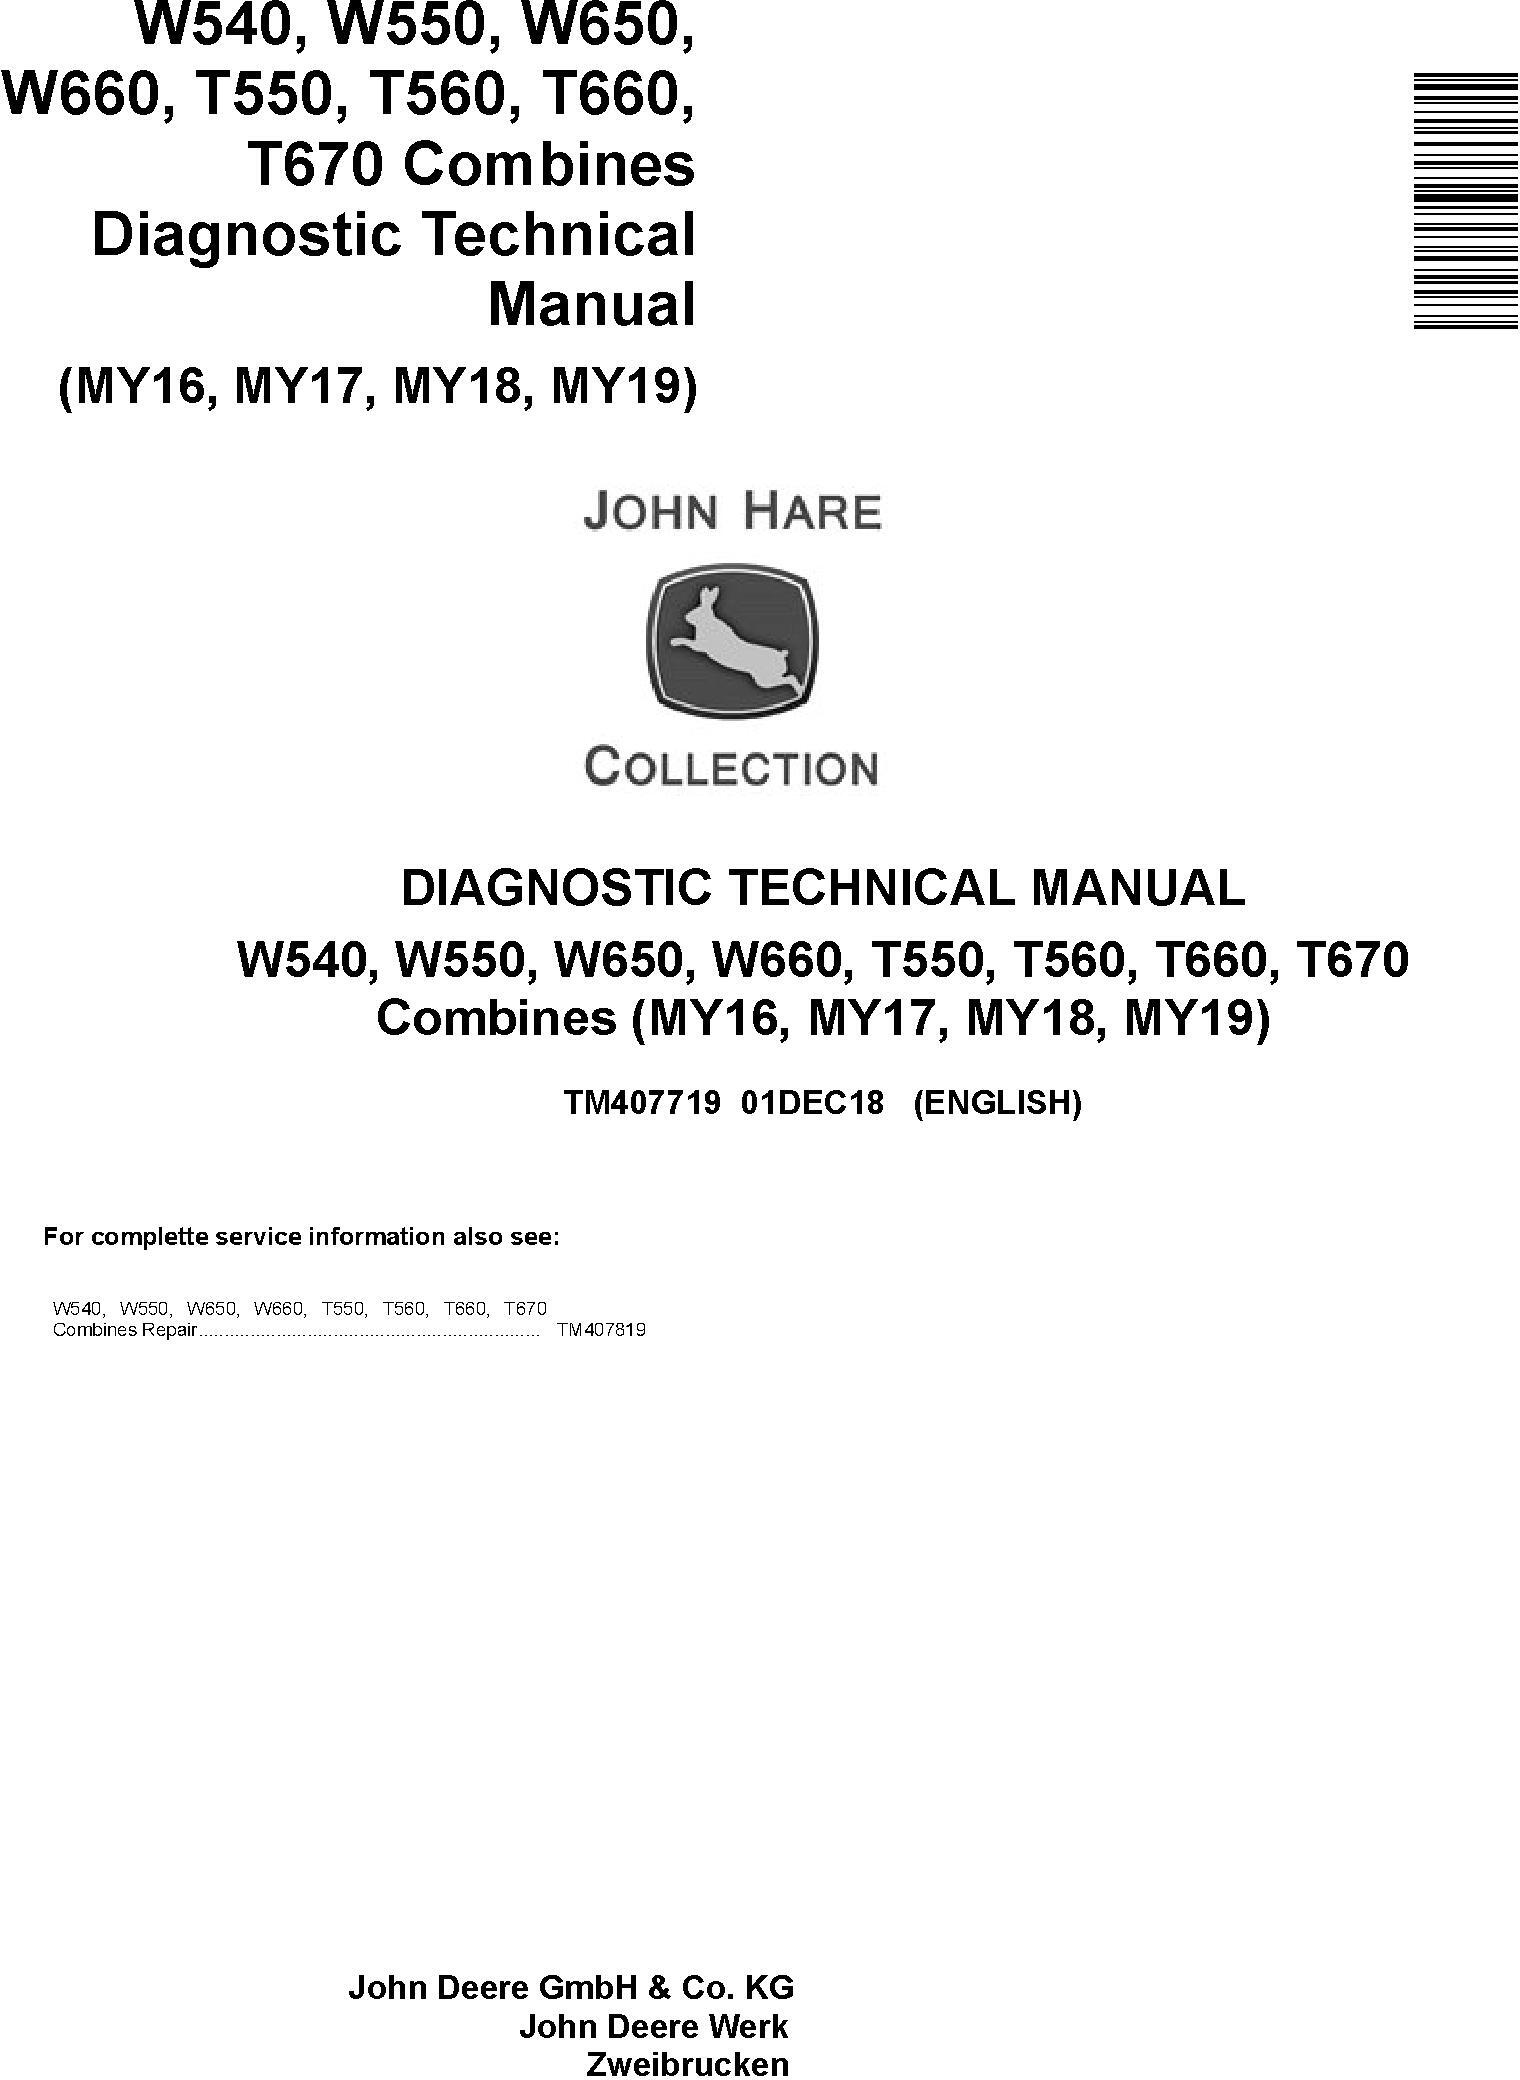 John Deere W540 W550 W650 W660, T550 T560 T660 T670 Combines Diagnostic Technical Manual (TM407719) - 19226